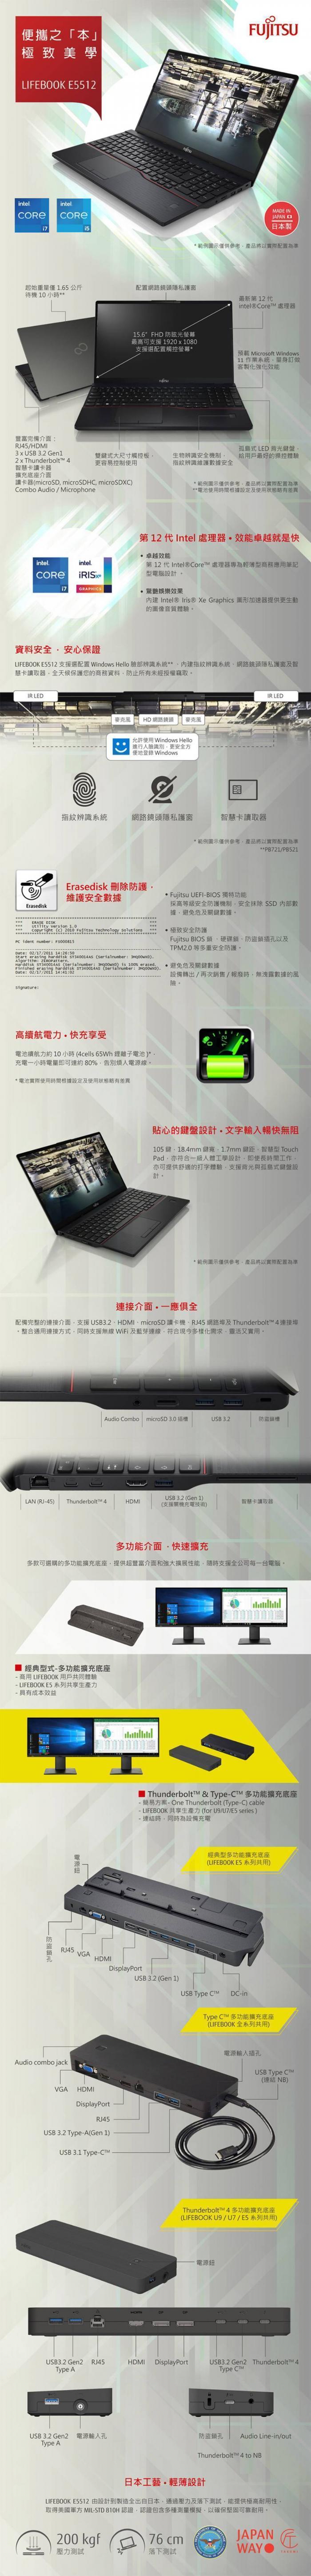 Fujitsu E5512-PS5245A 黑 (加送16G)